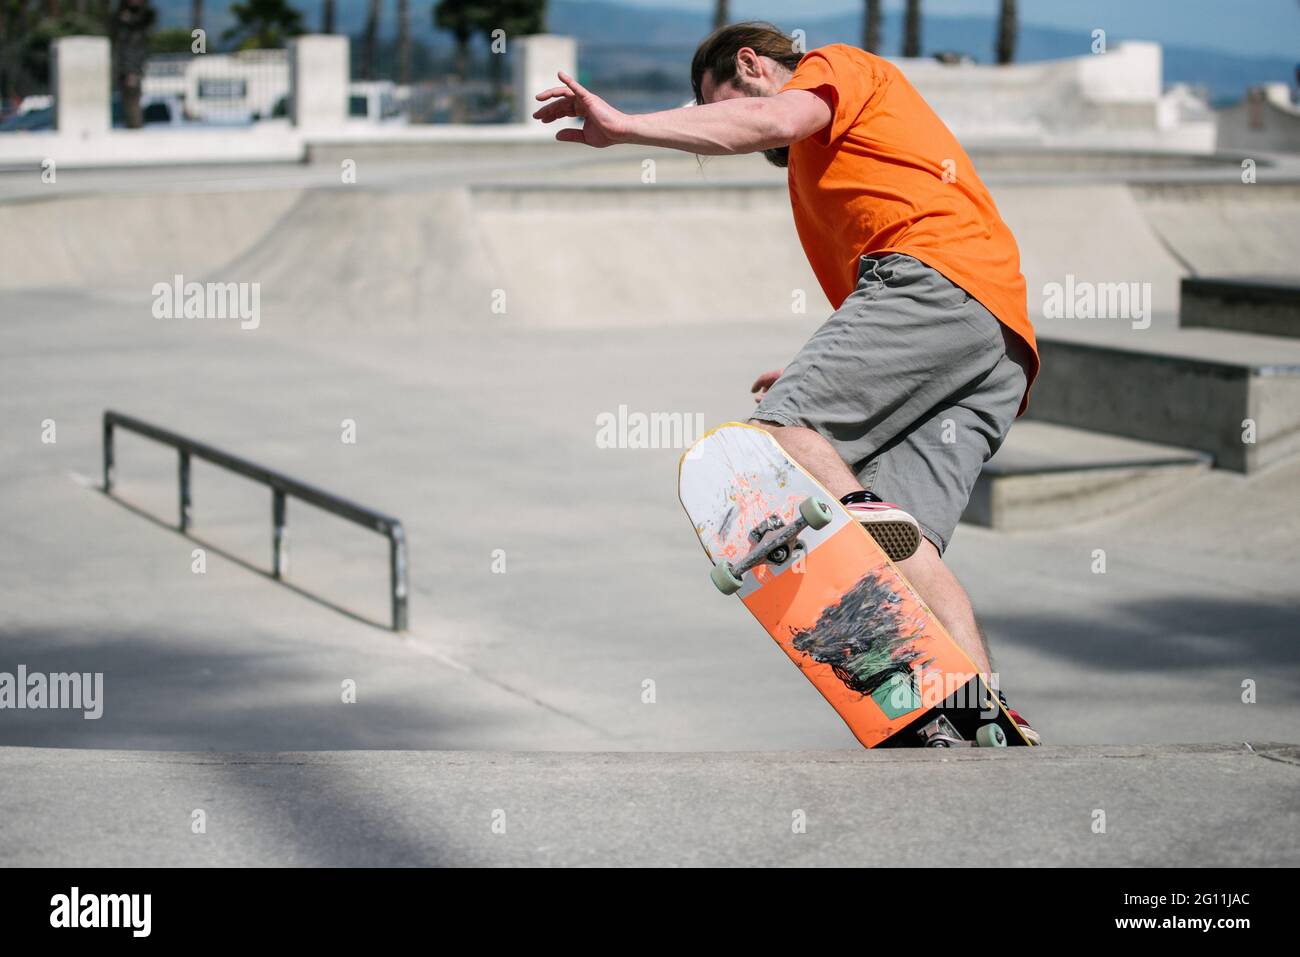 USA, Kalifornien, Ventura, man Skateboarding im Skatepark Stockfoto